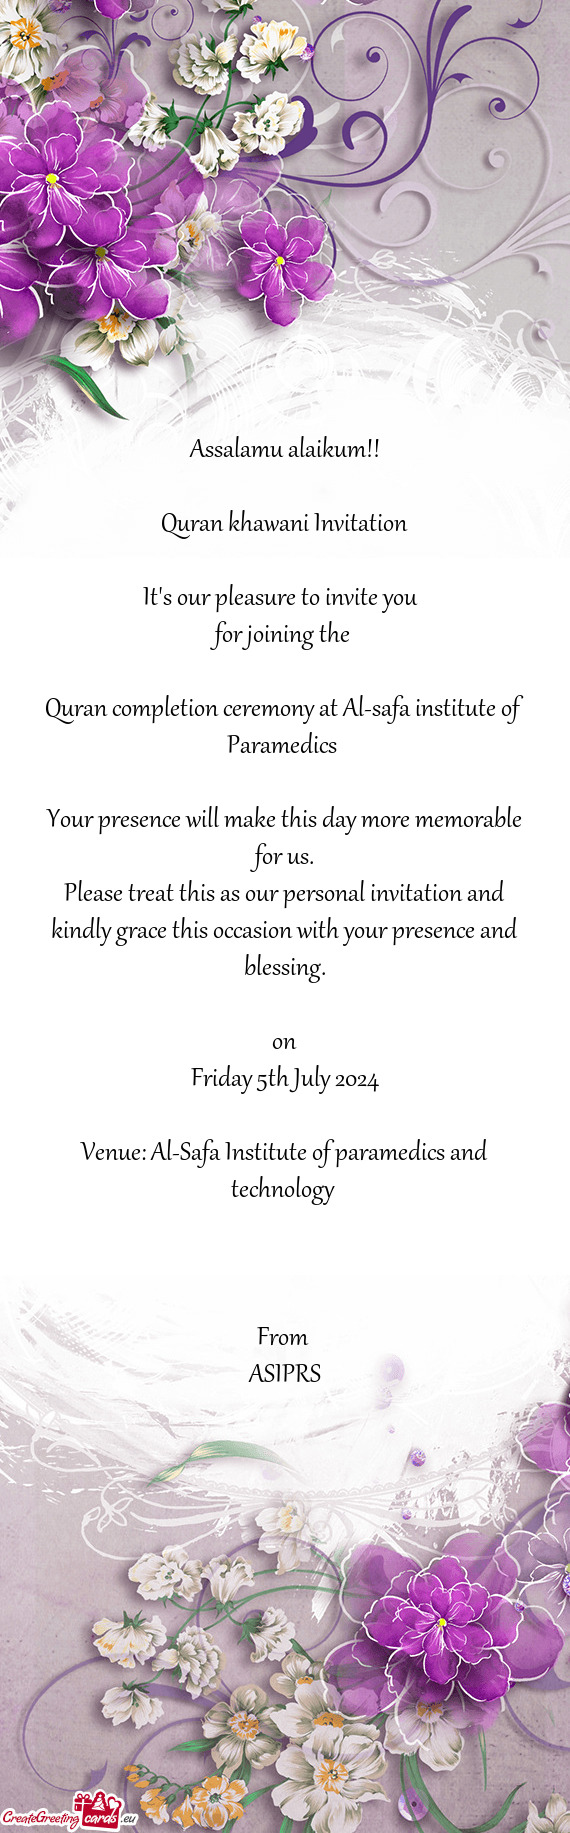 Quran completion ceremony at Al-safa institute of Paramedics